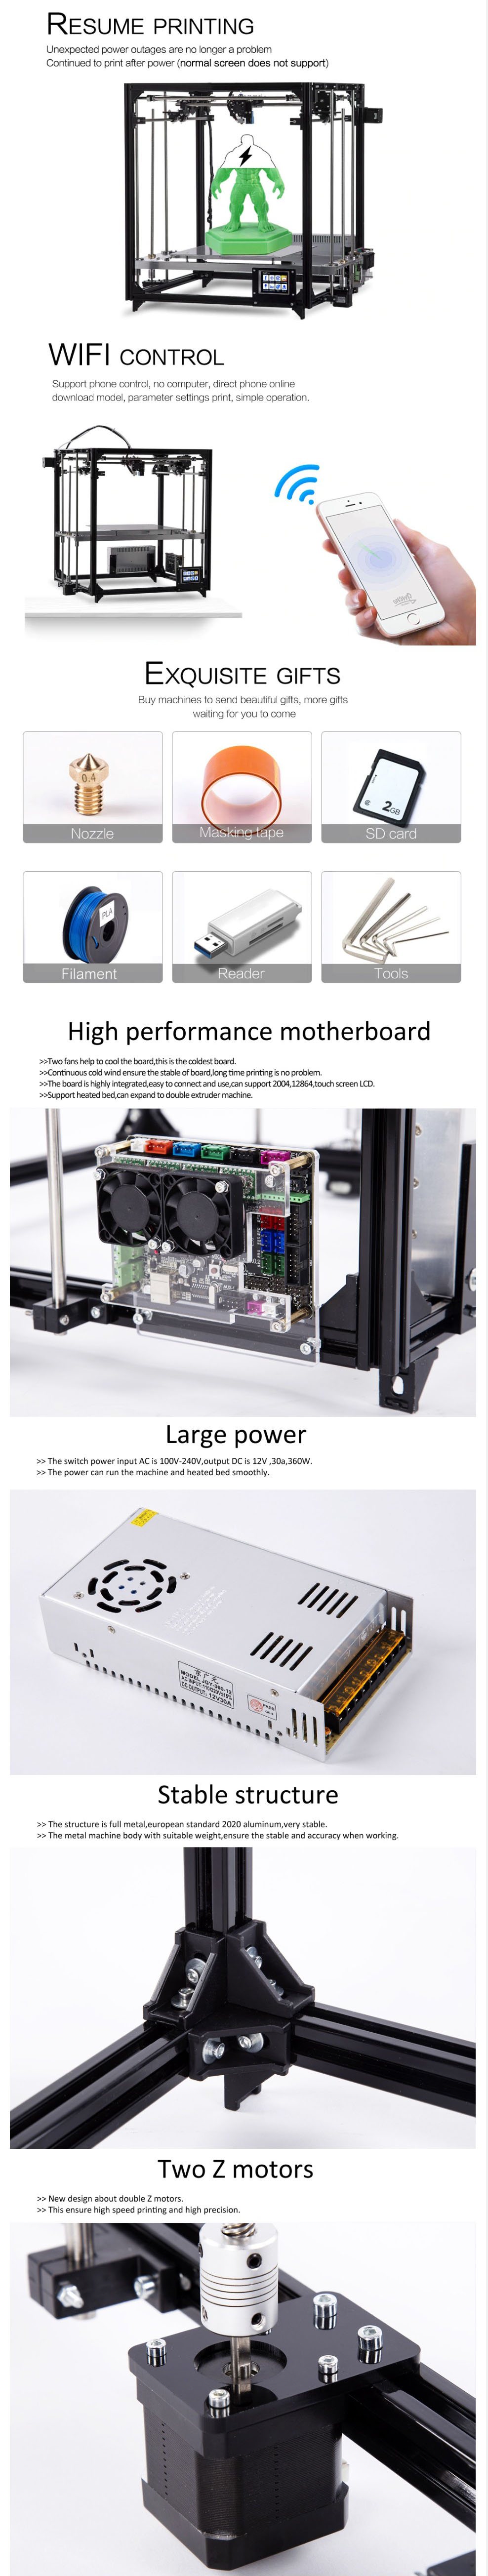 FLSUN CUBE Large Scale Dual Extruder 3D Printer